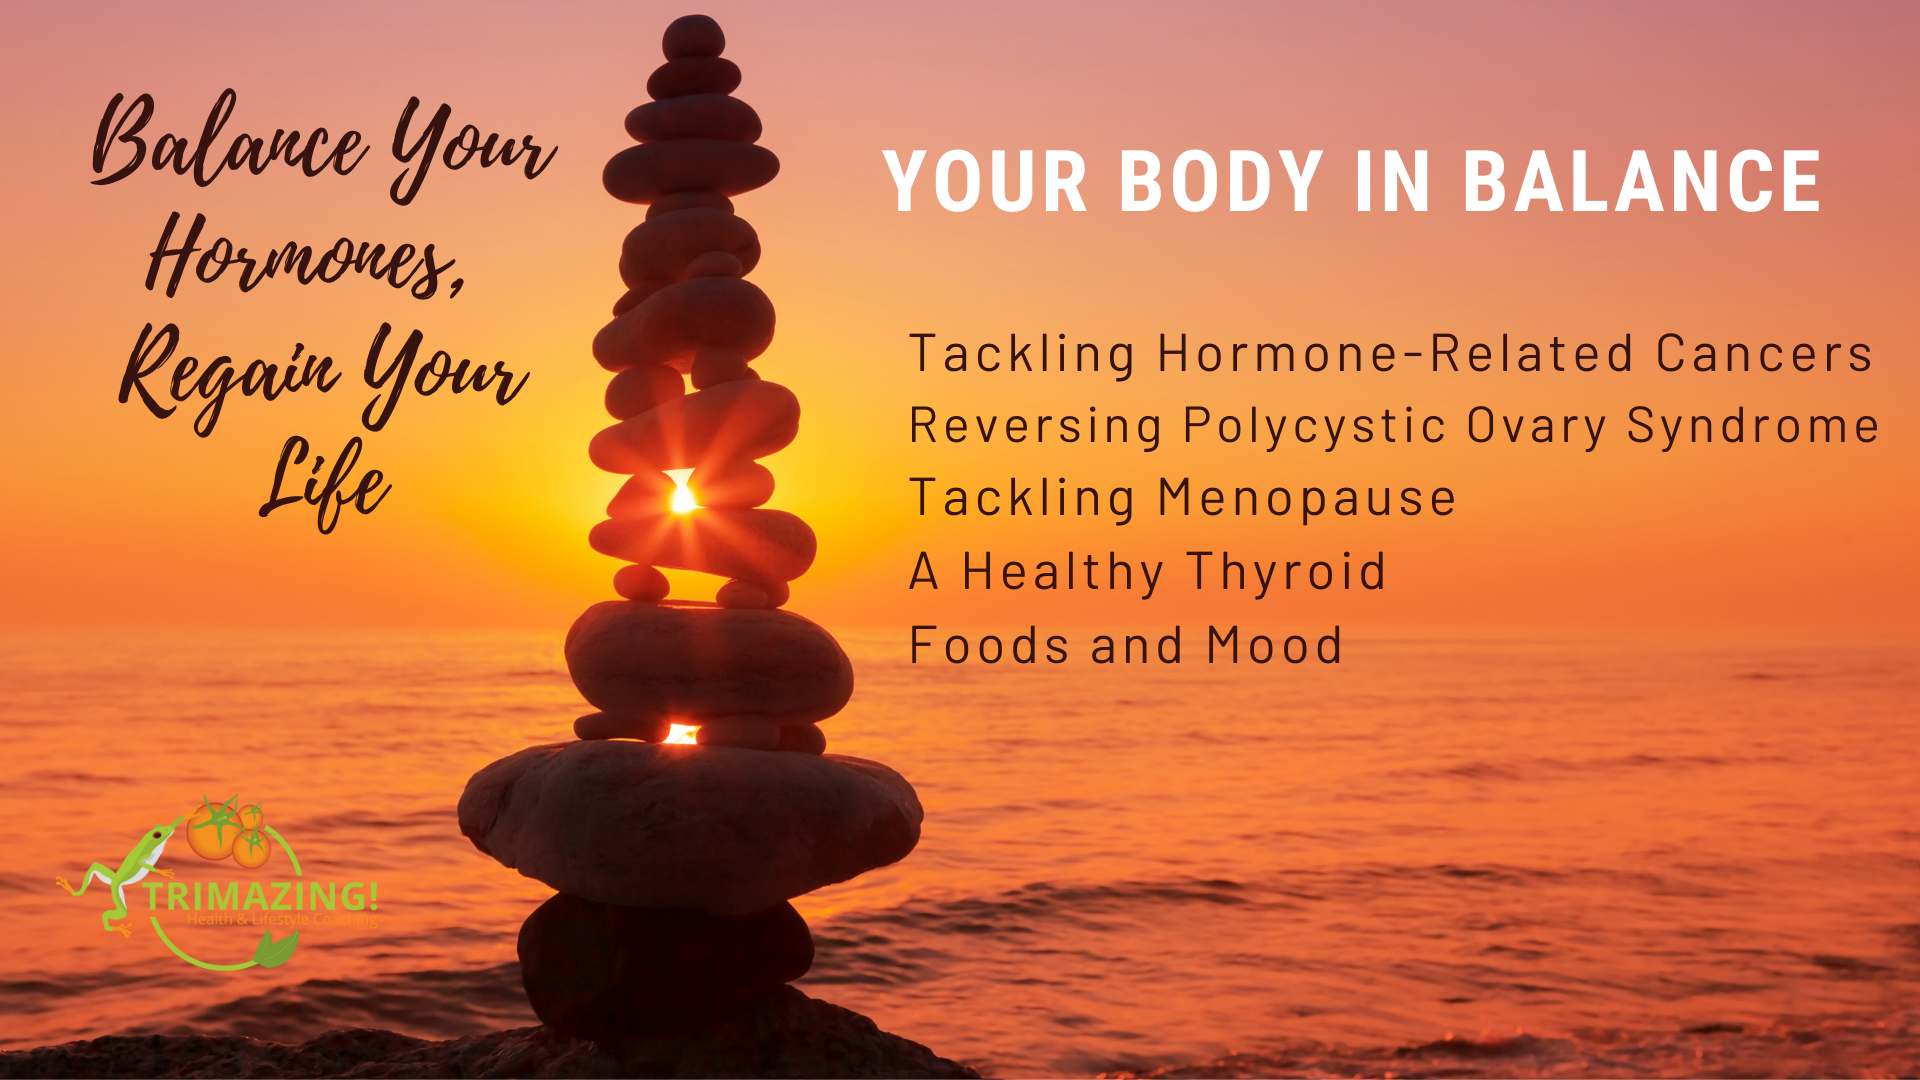 https://trimazing.com/series/your-body-in-balance-balance-your-hormones-regain-your-life/